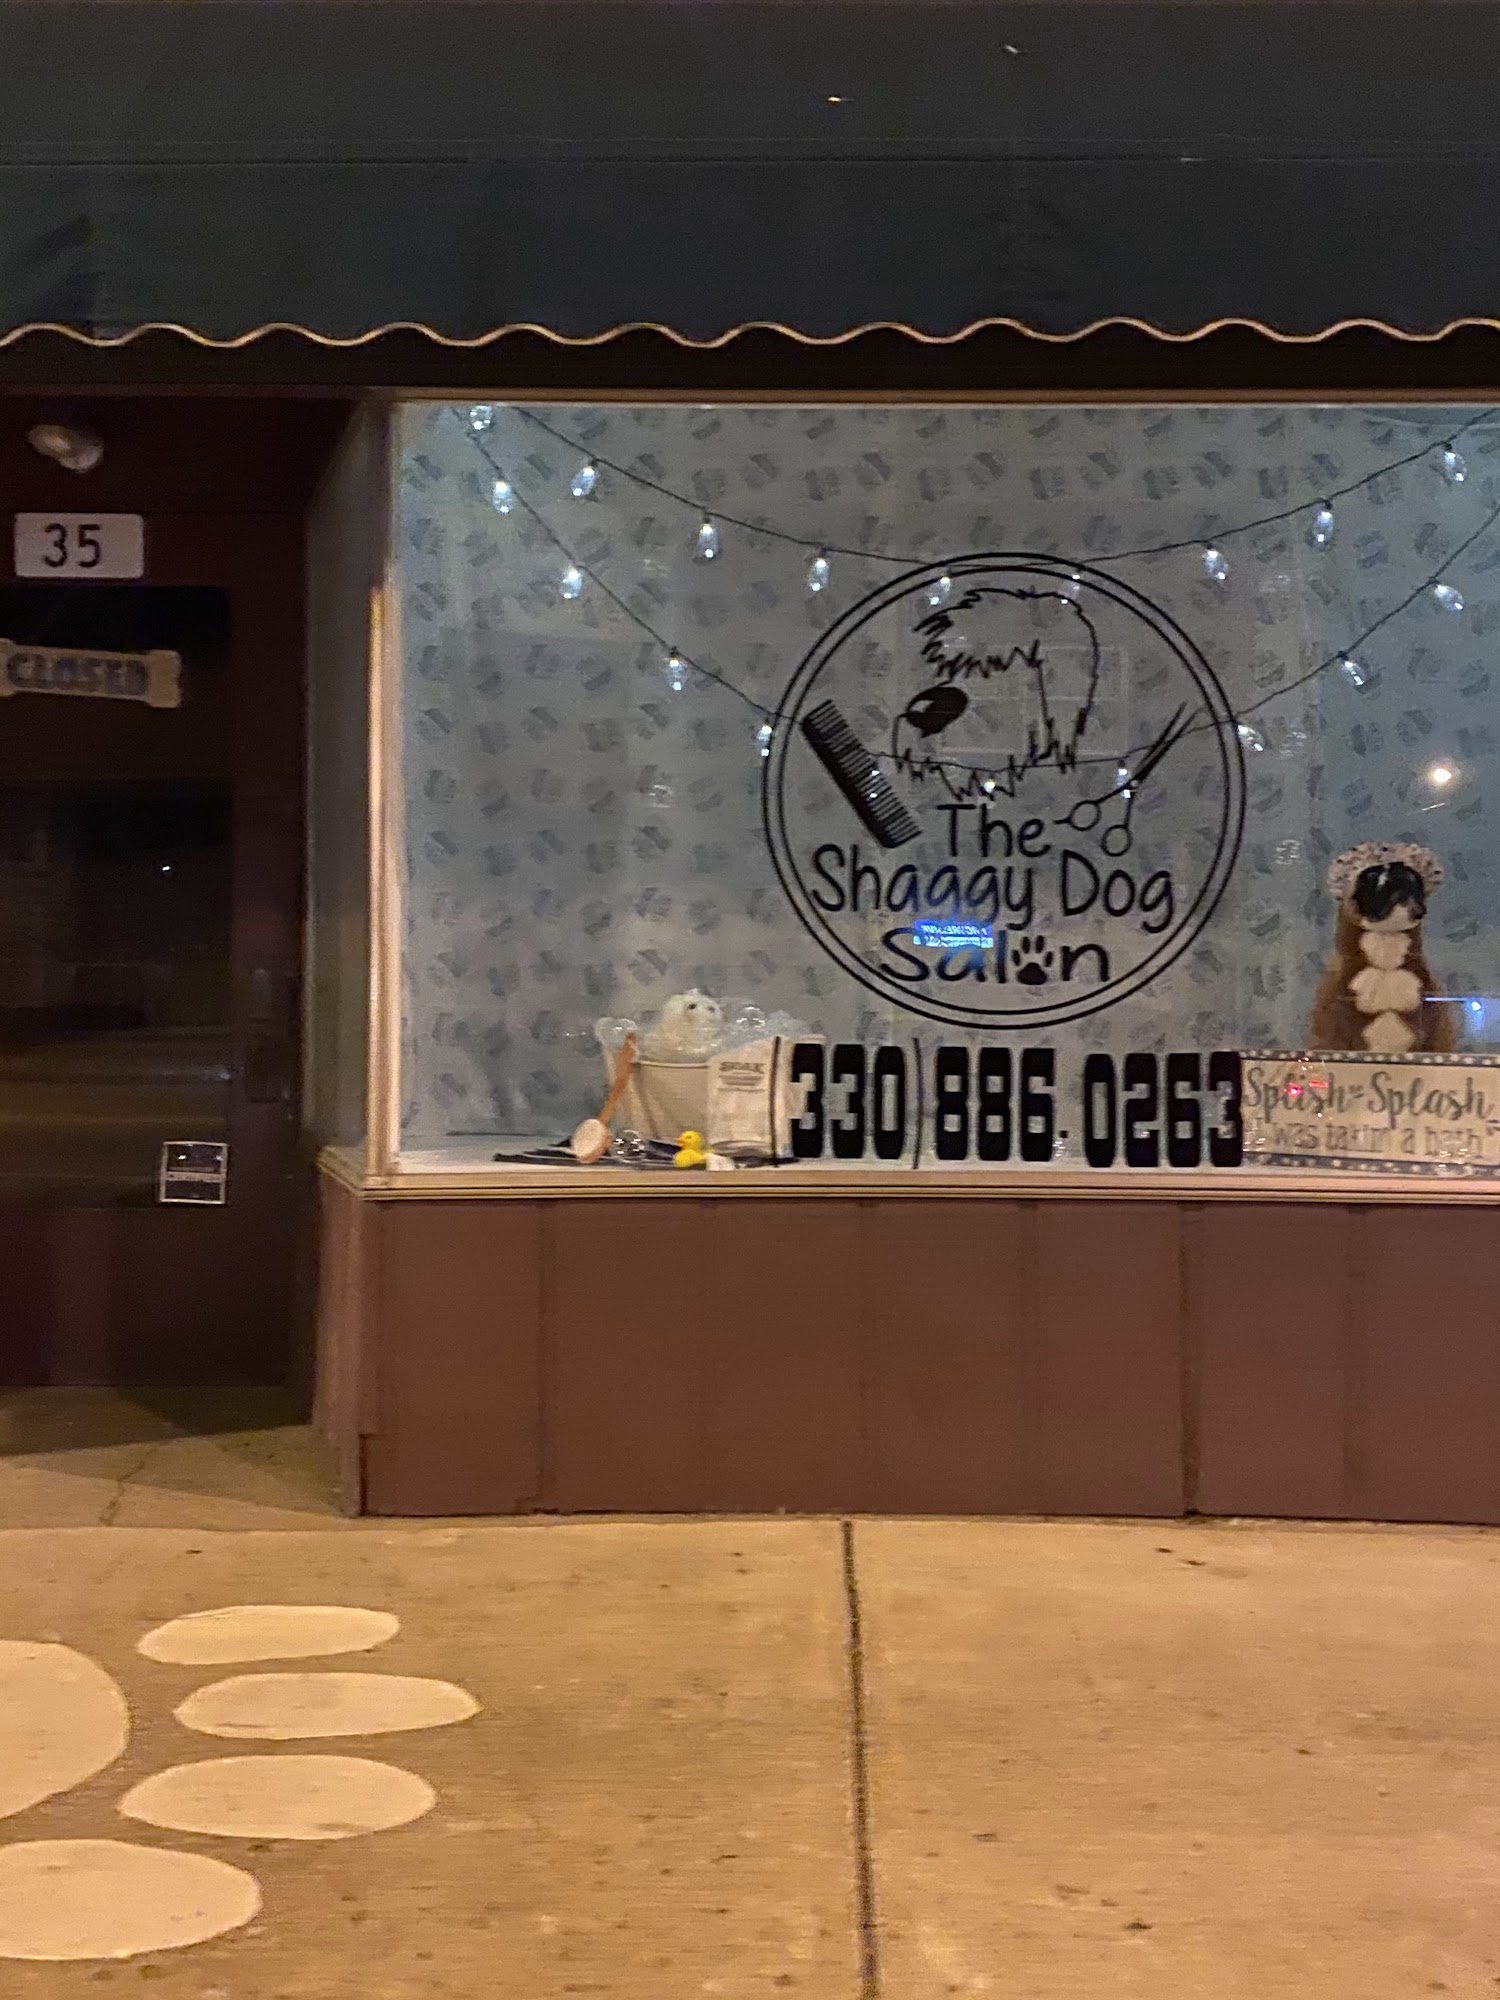 The Shaggy Dog Grooming Salon 35 N Market St, East Palestine Ohio 44413